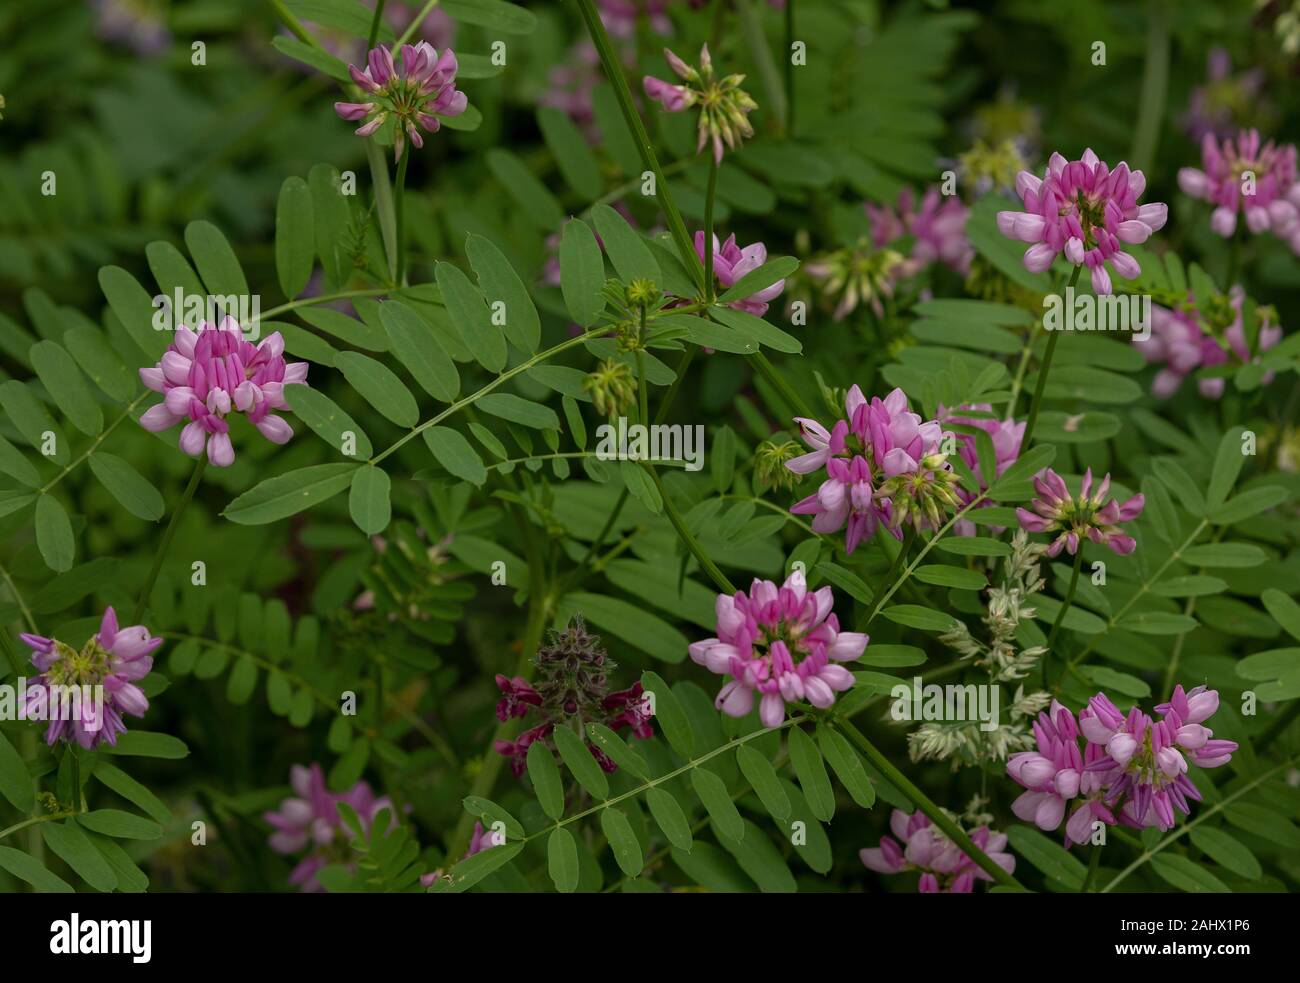 Crown vetch, Securigera varia, in flower. Stock Photo